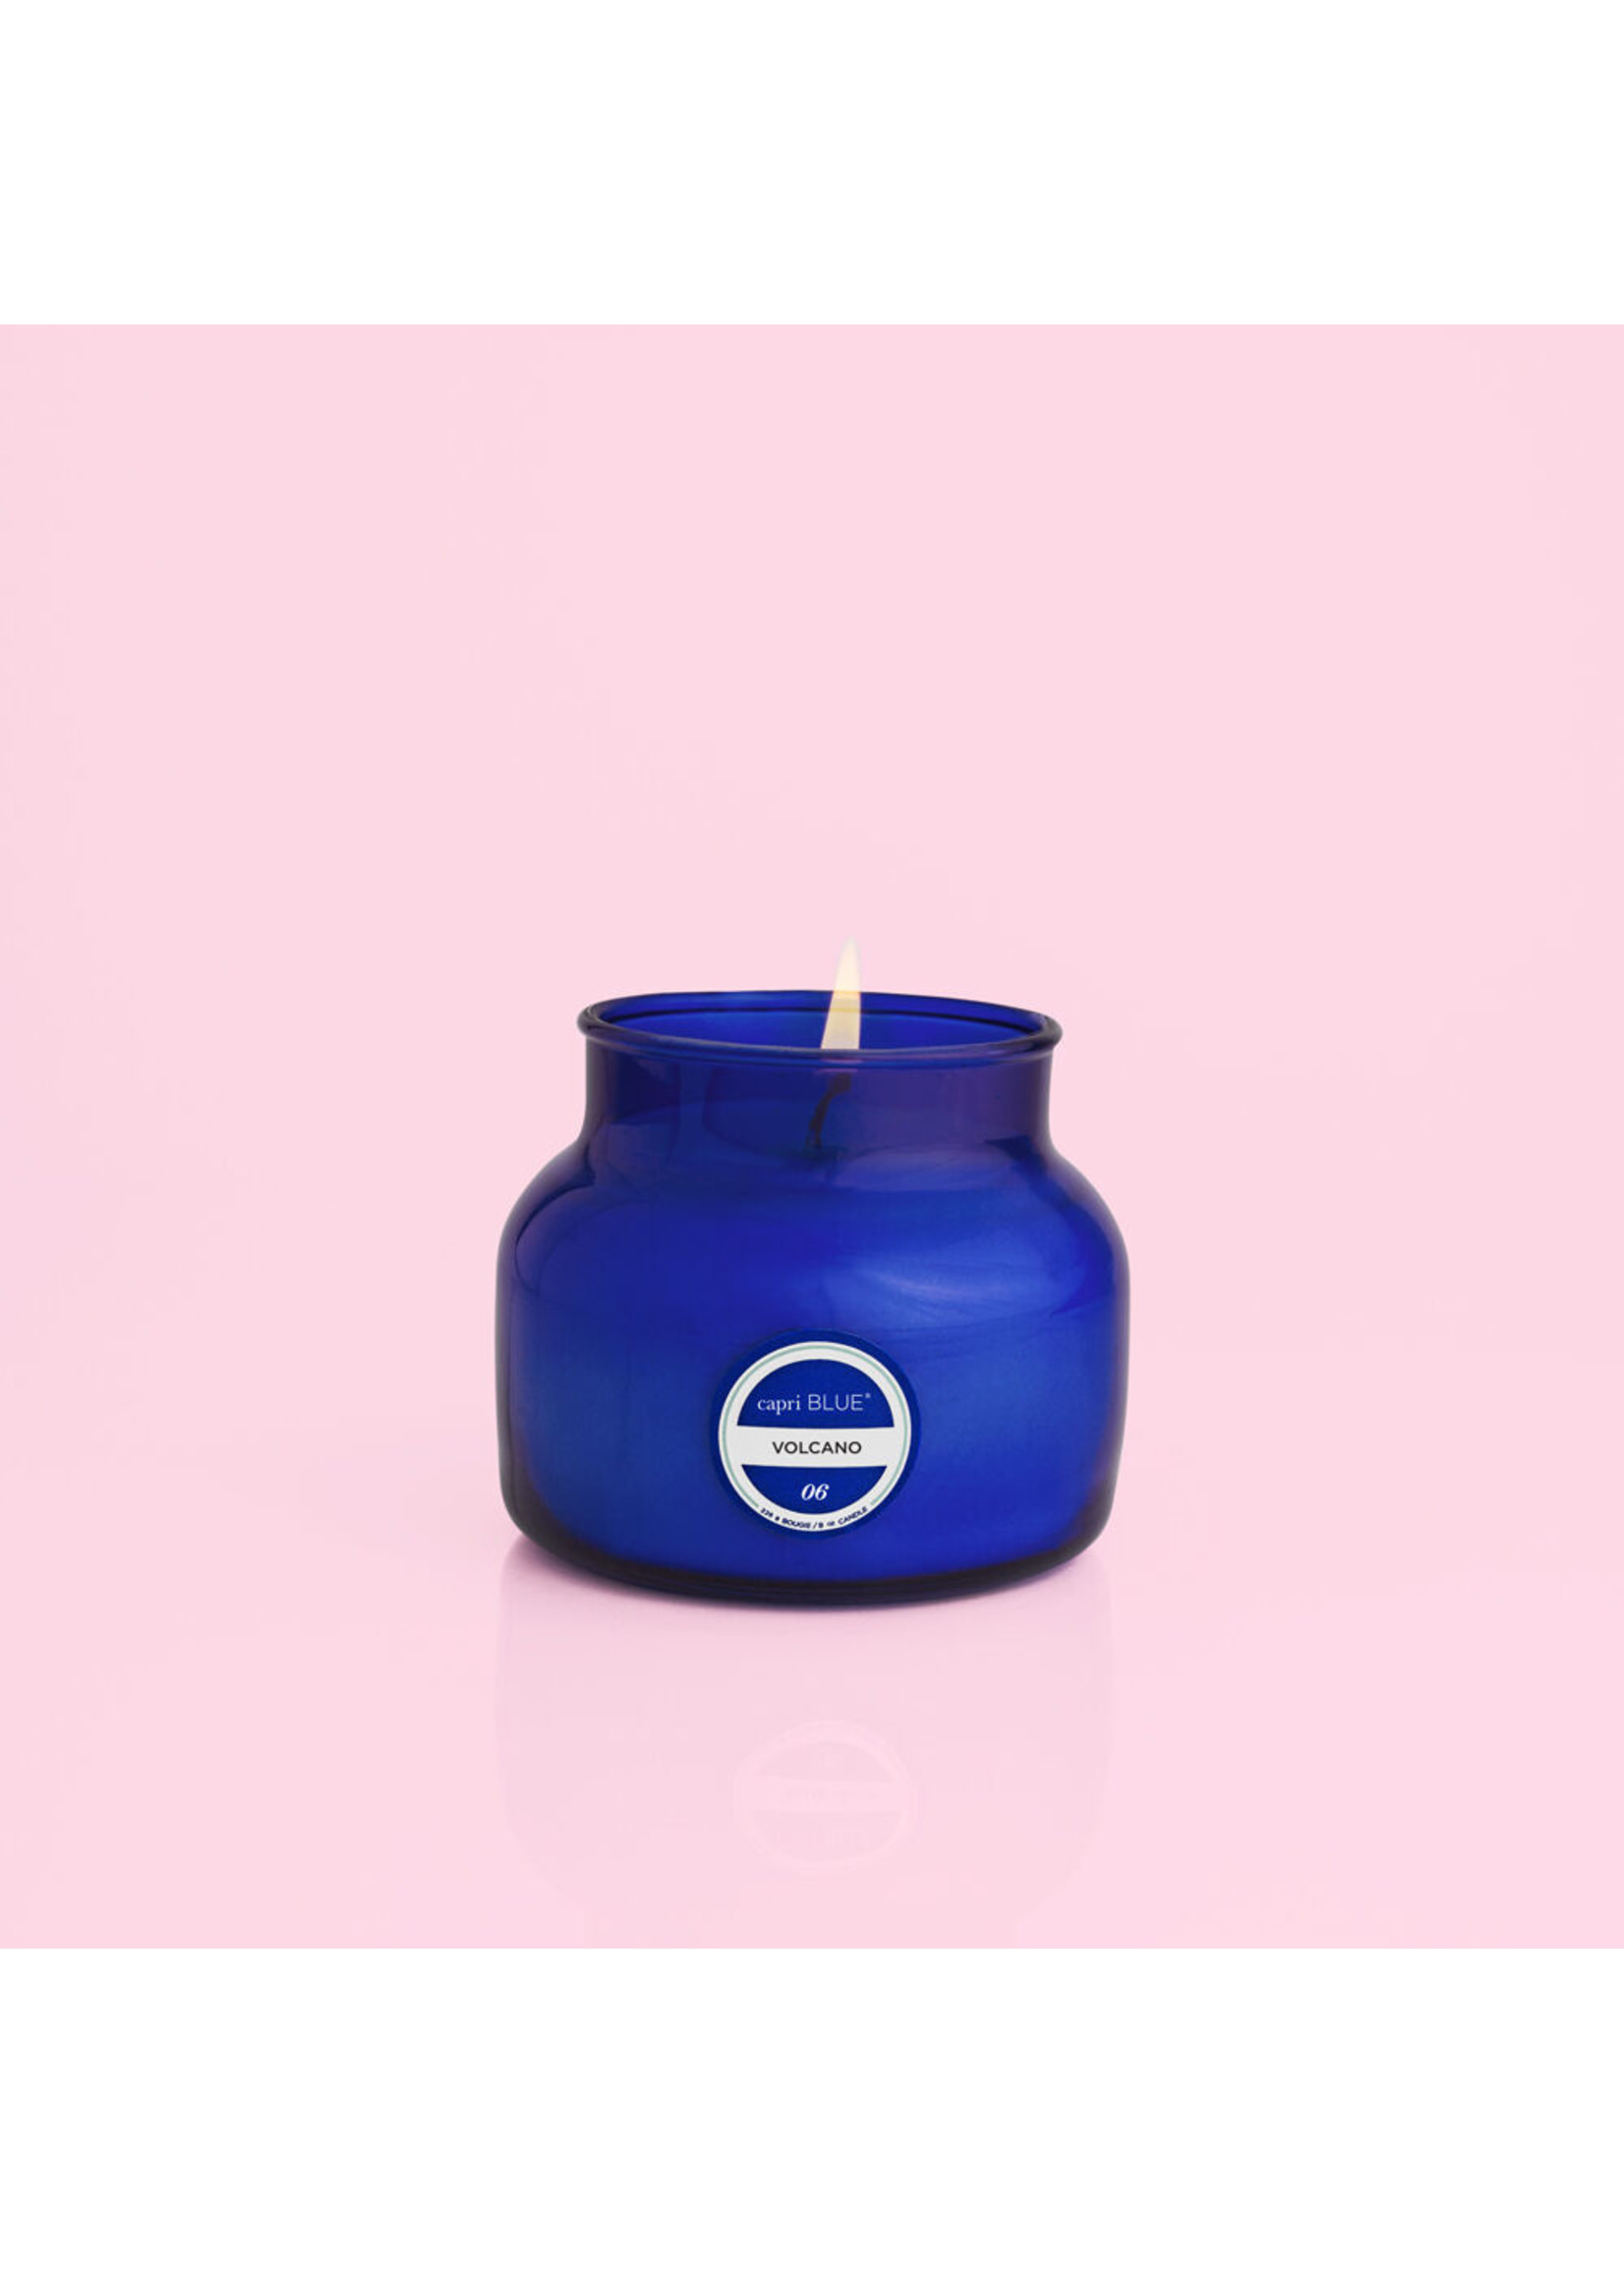 Capri Blue Volcano Signature Blue Petite Jar Candle 8oz